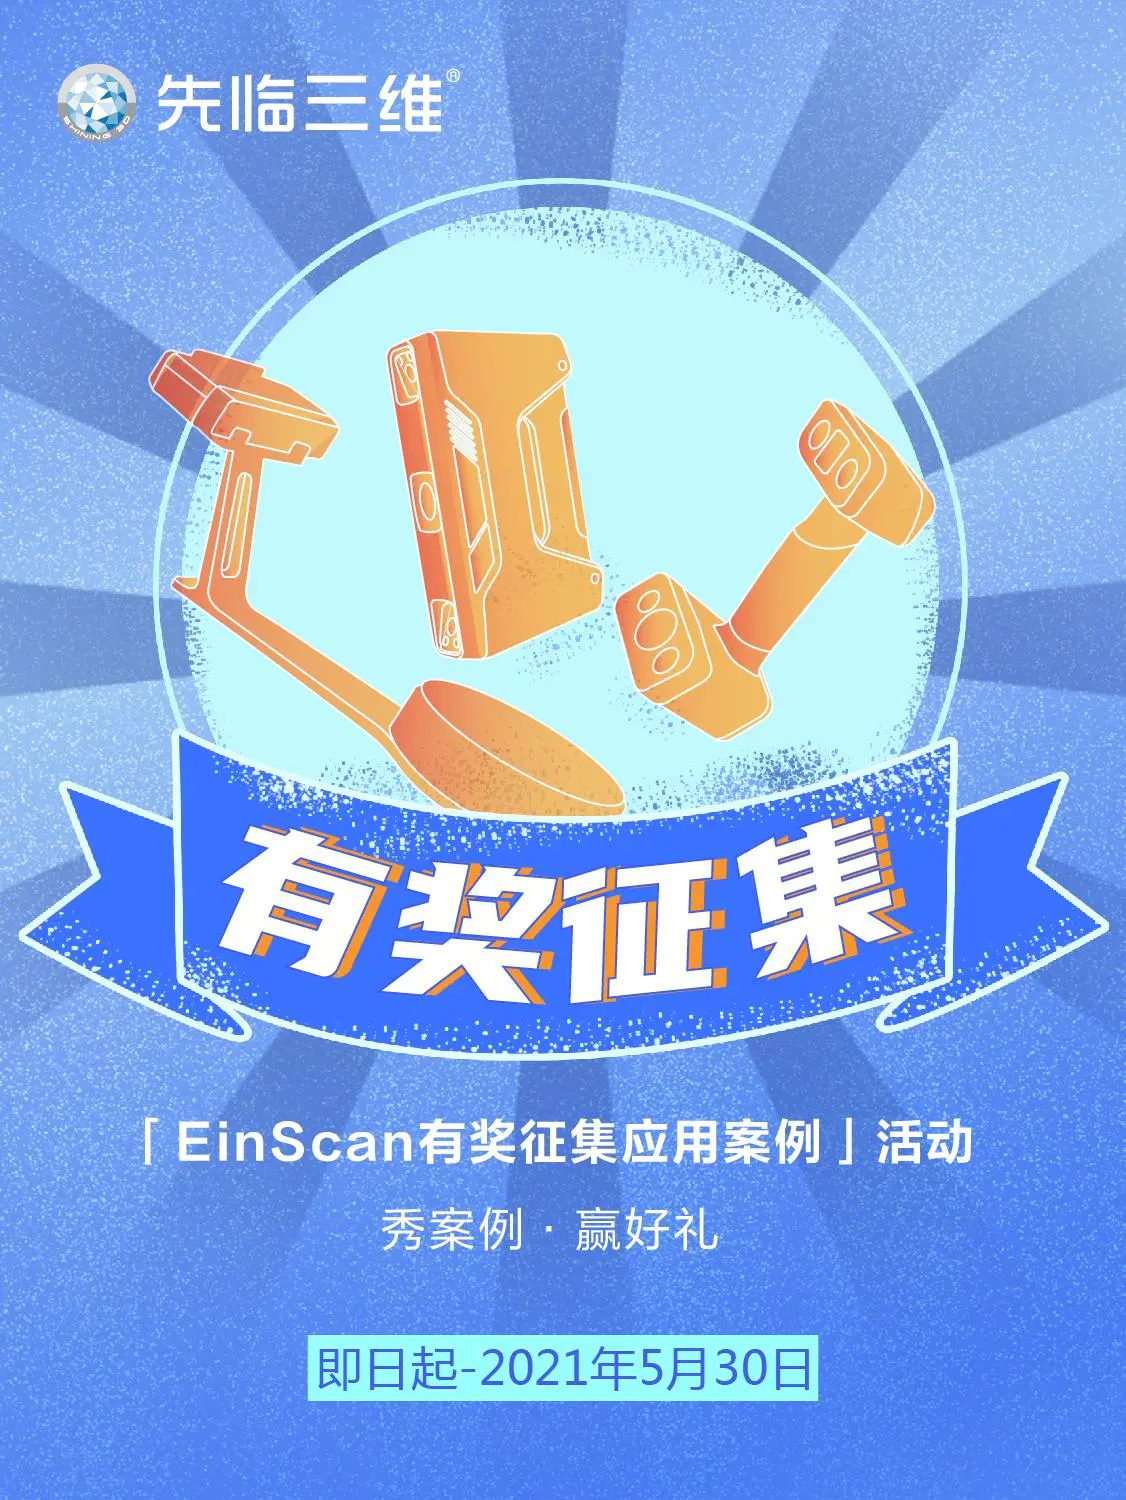 EinScan有奖征集应用案例活动